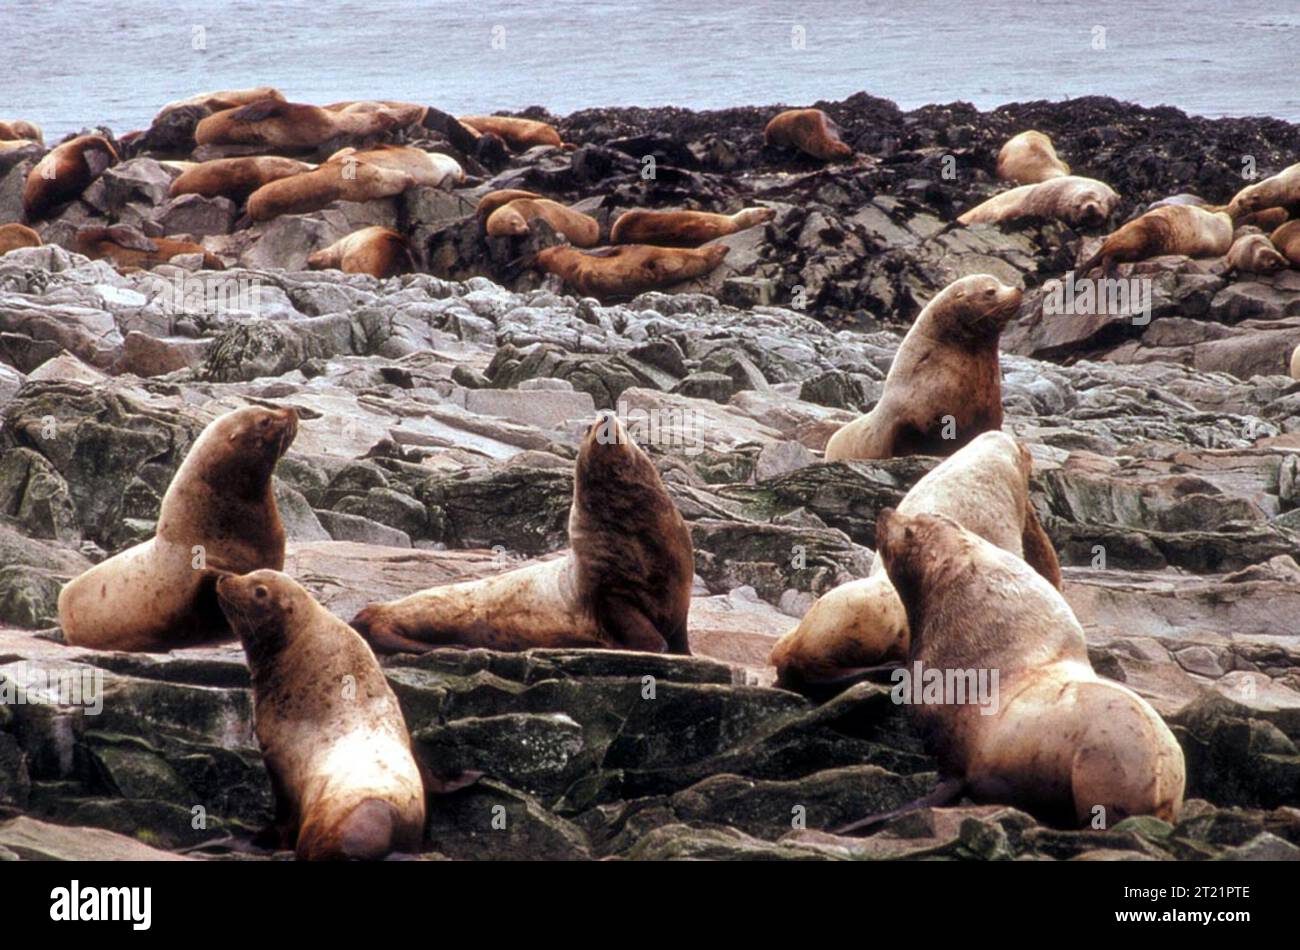 Creator: Dewhurst, Donna A. Subjects: Marine mammals; Alaska Maritime National Wildlife Refuge; Amchitka; Aleutians; Donna Dewhurst Collection; Alaska.  . 1998 - 2011. Stock Photo